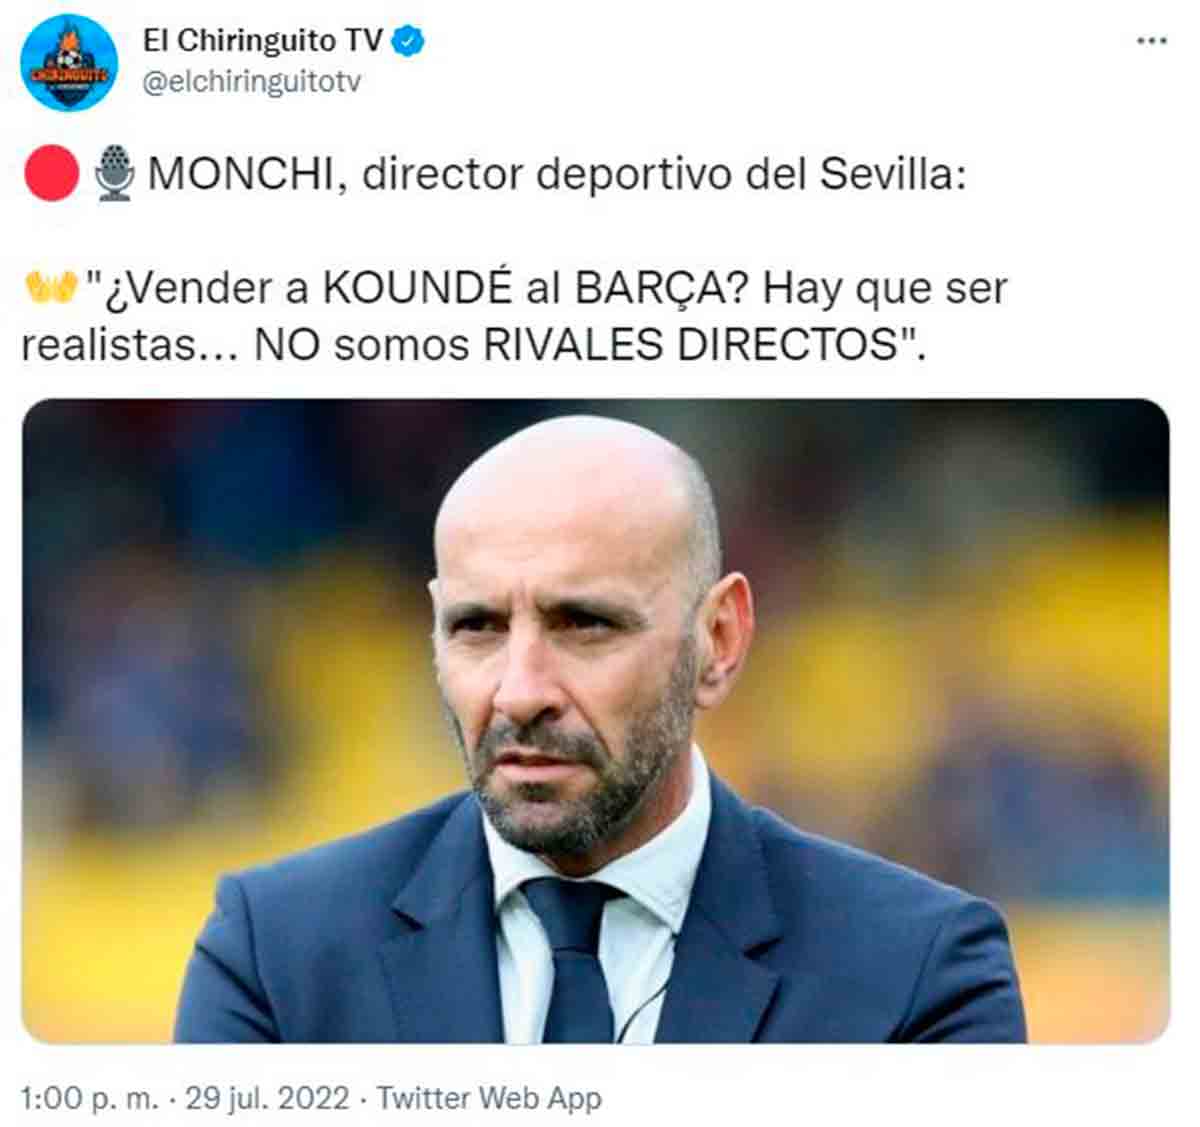 Monchi Sevilla rivales